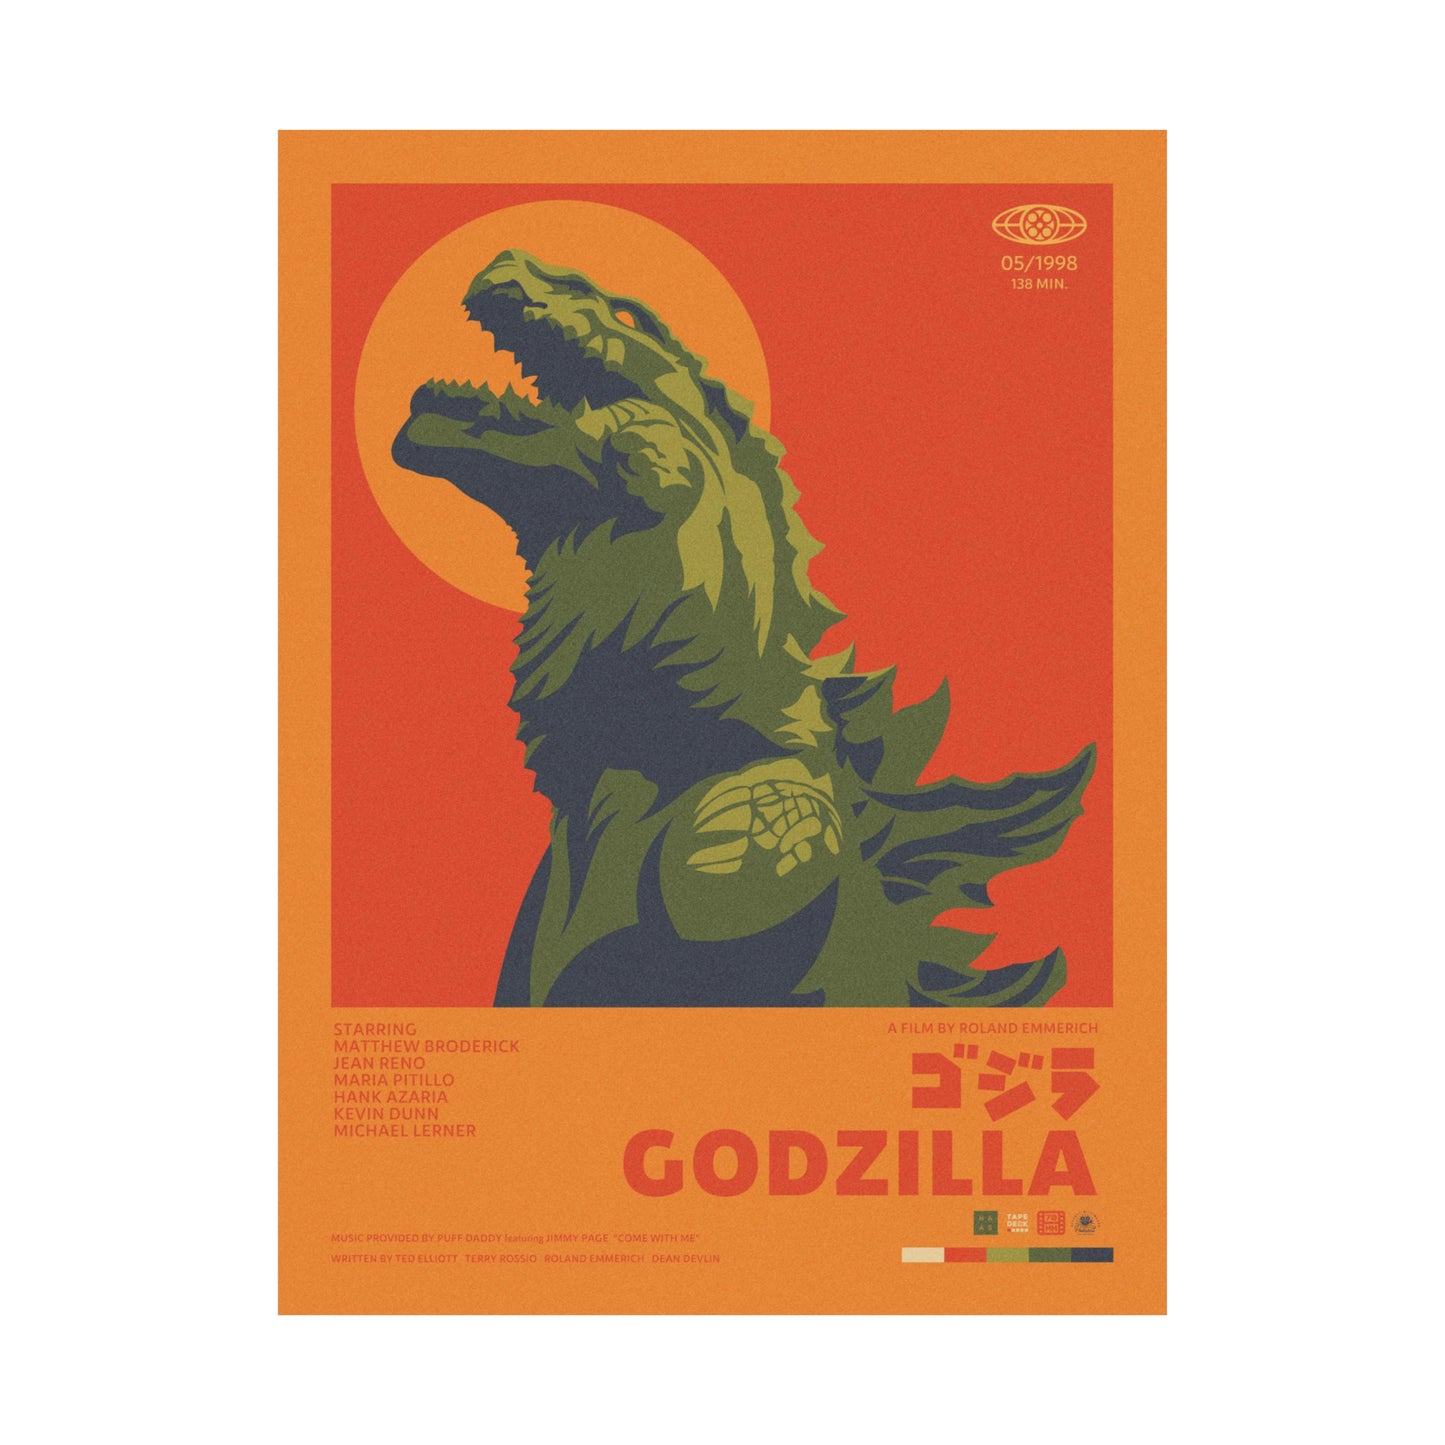 Episode 185: Godzilla (1998)